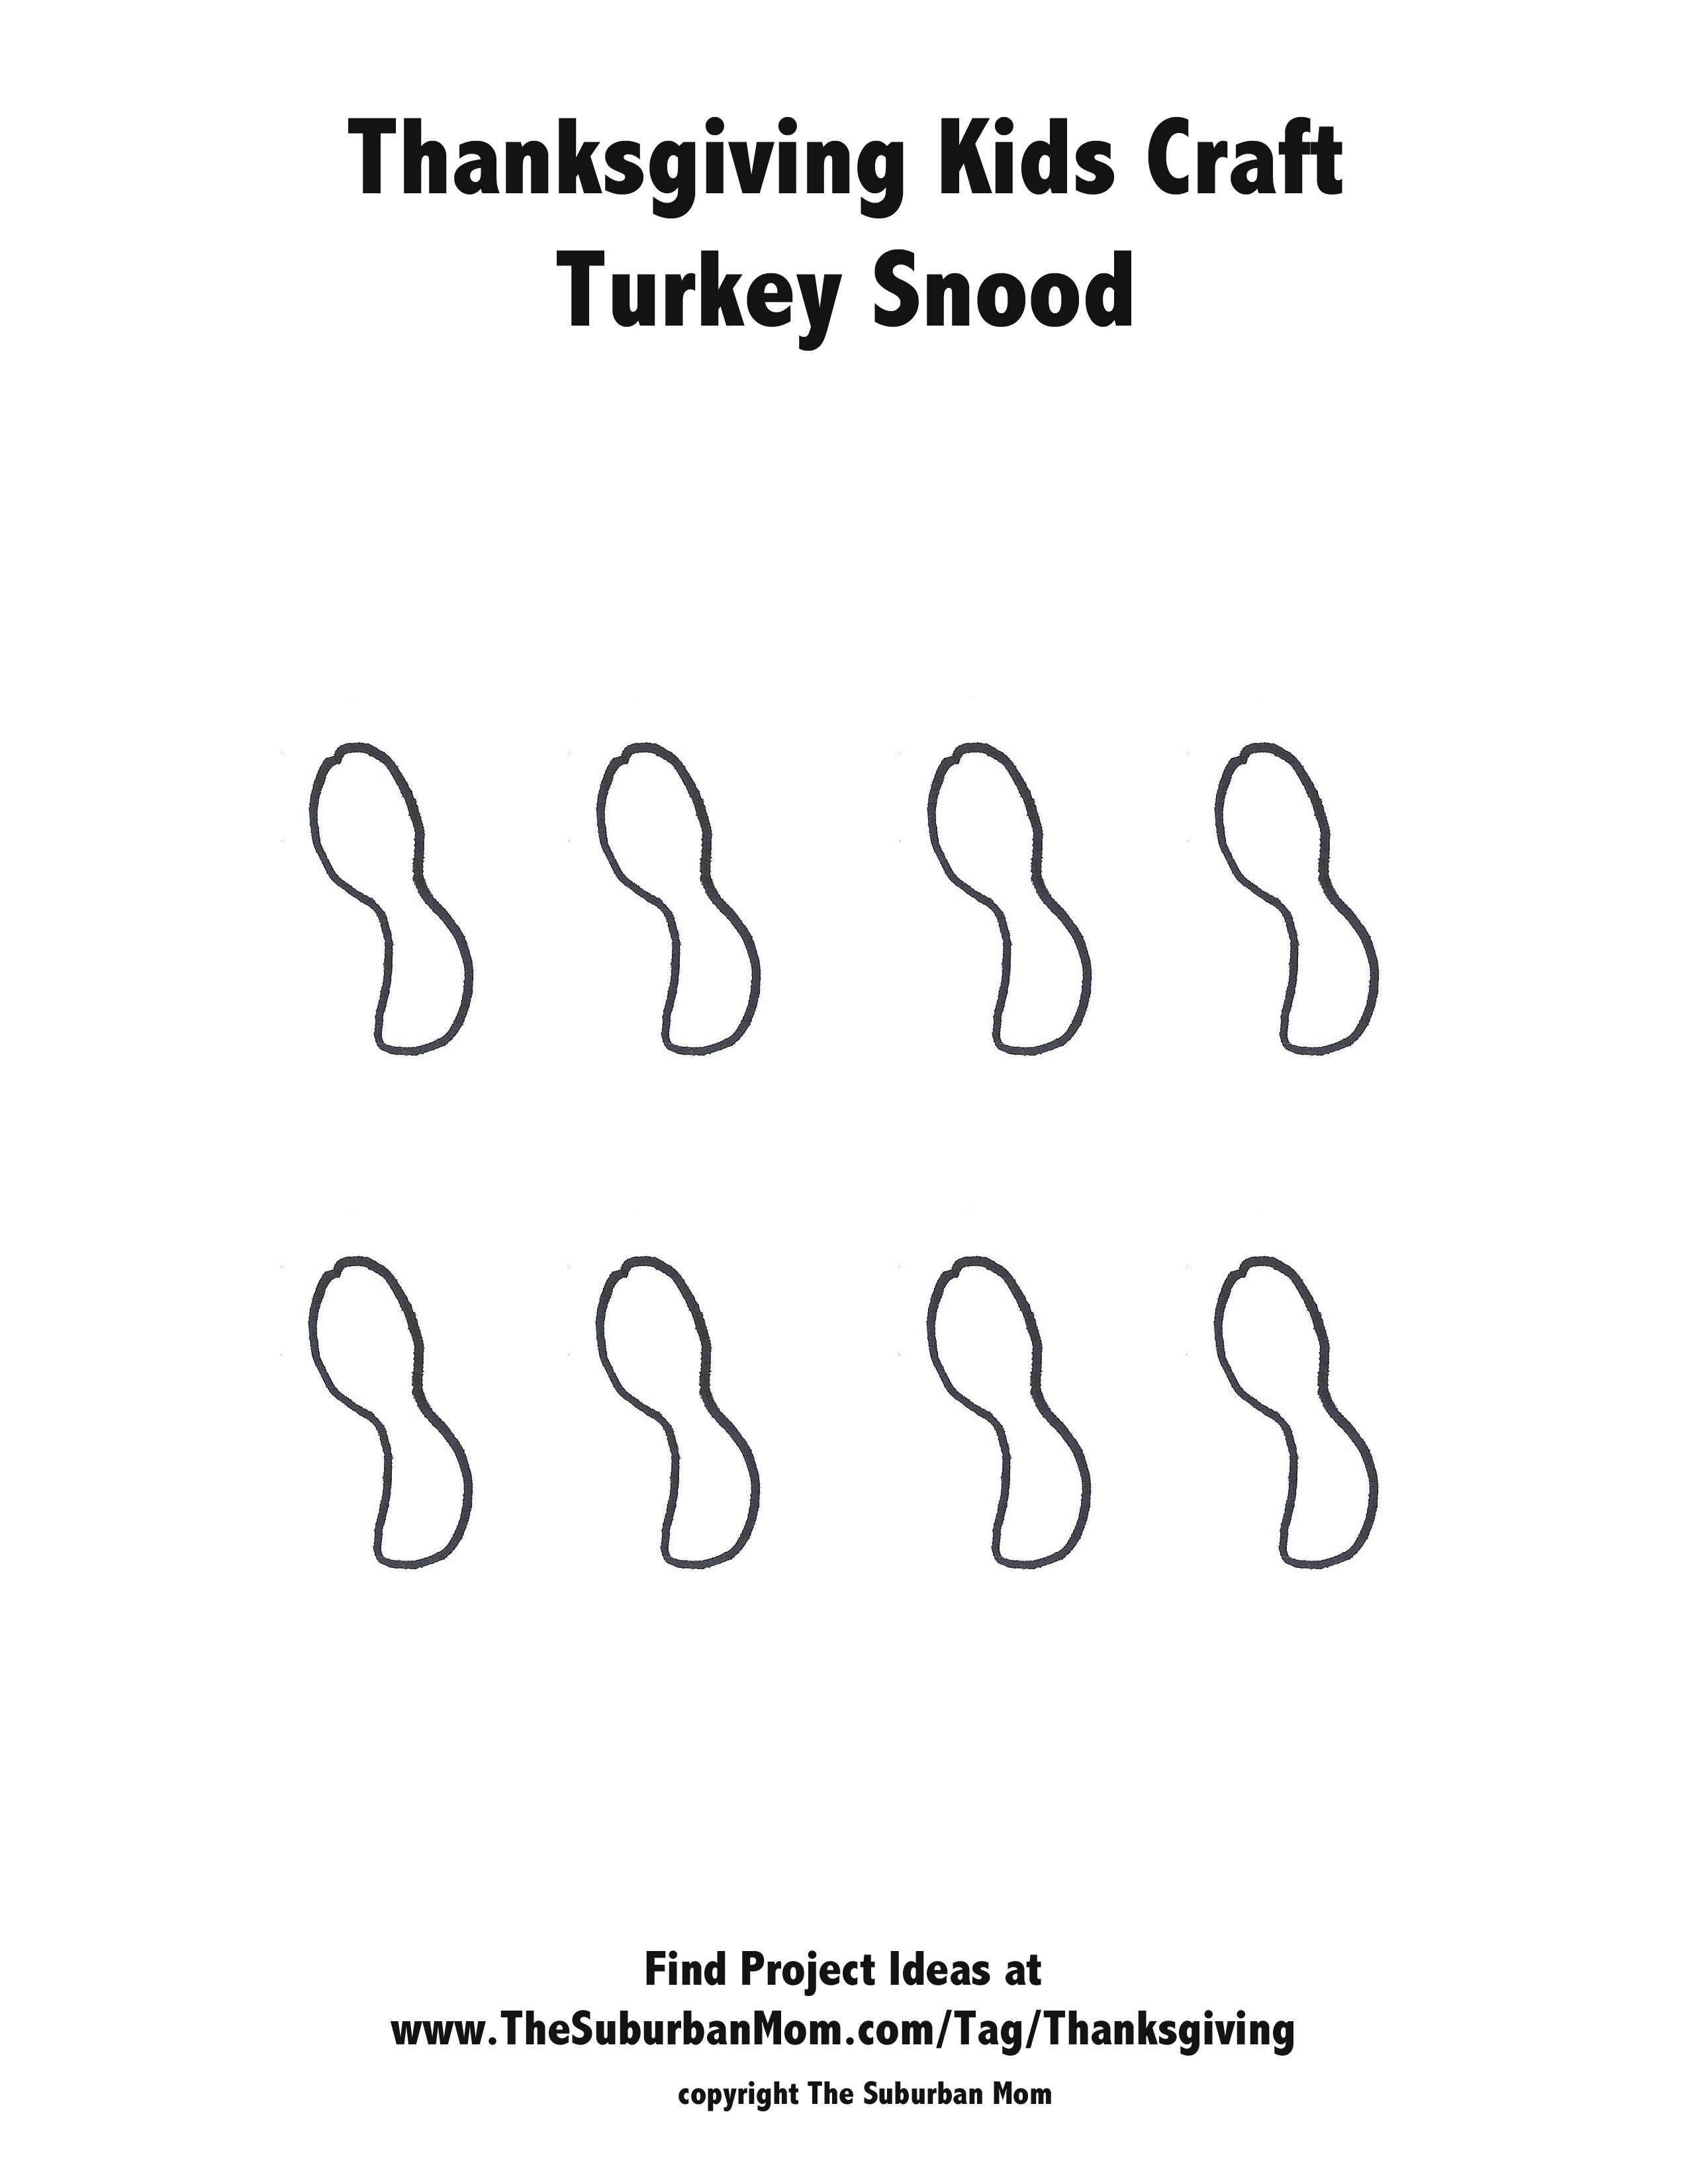 Thanksgiving Kids Craft: Handprint Turkey Crown - The Suburban Mom - Free Printable Turkey Craft